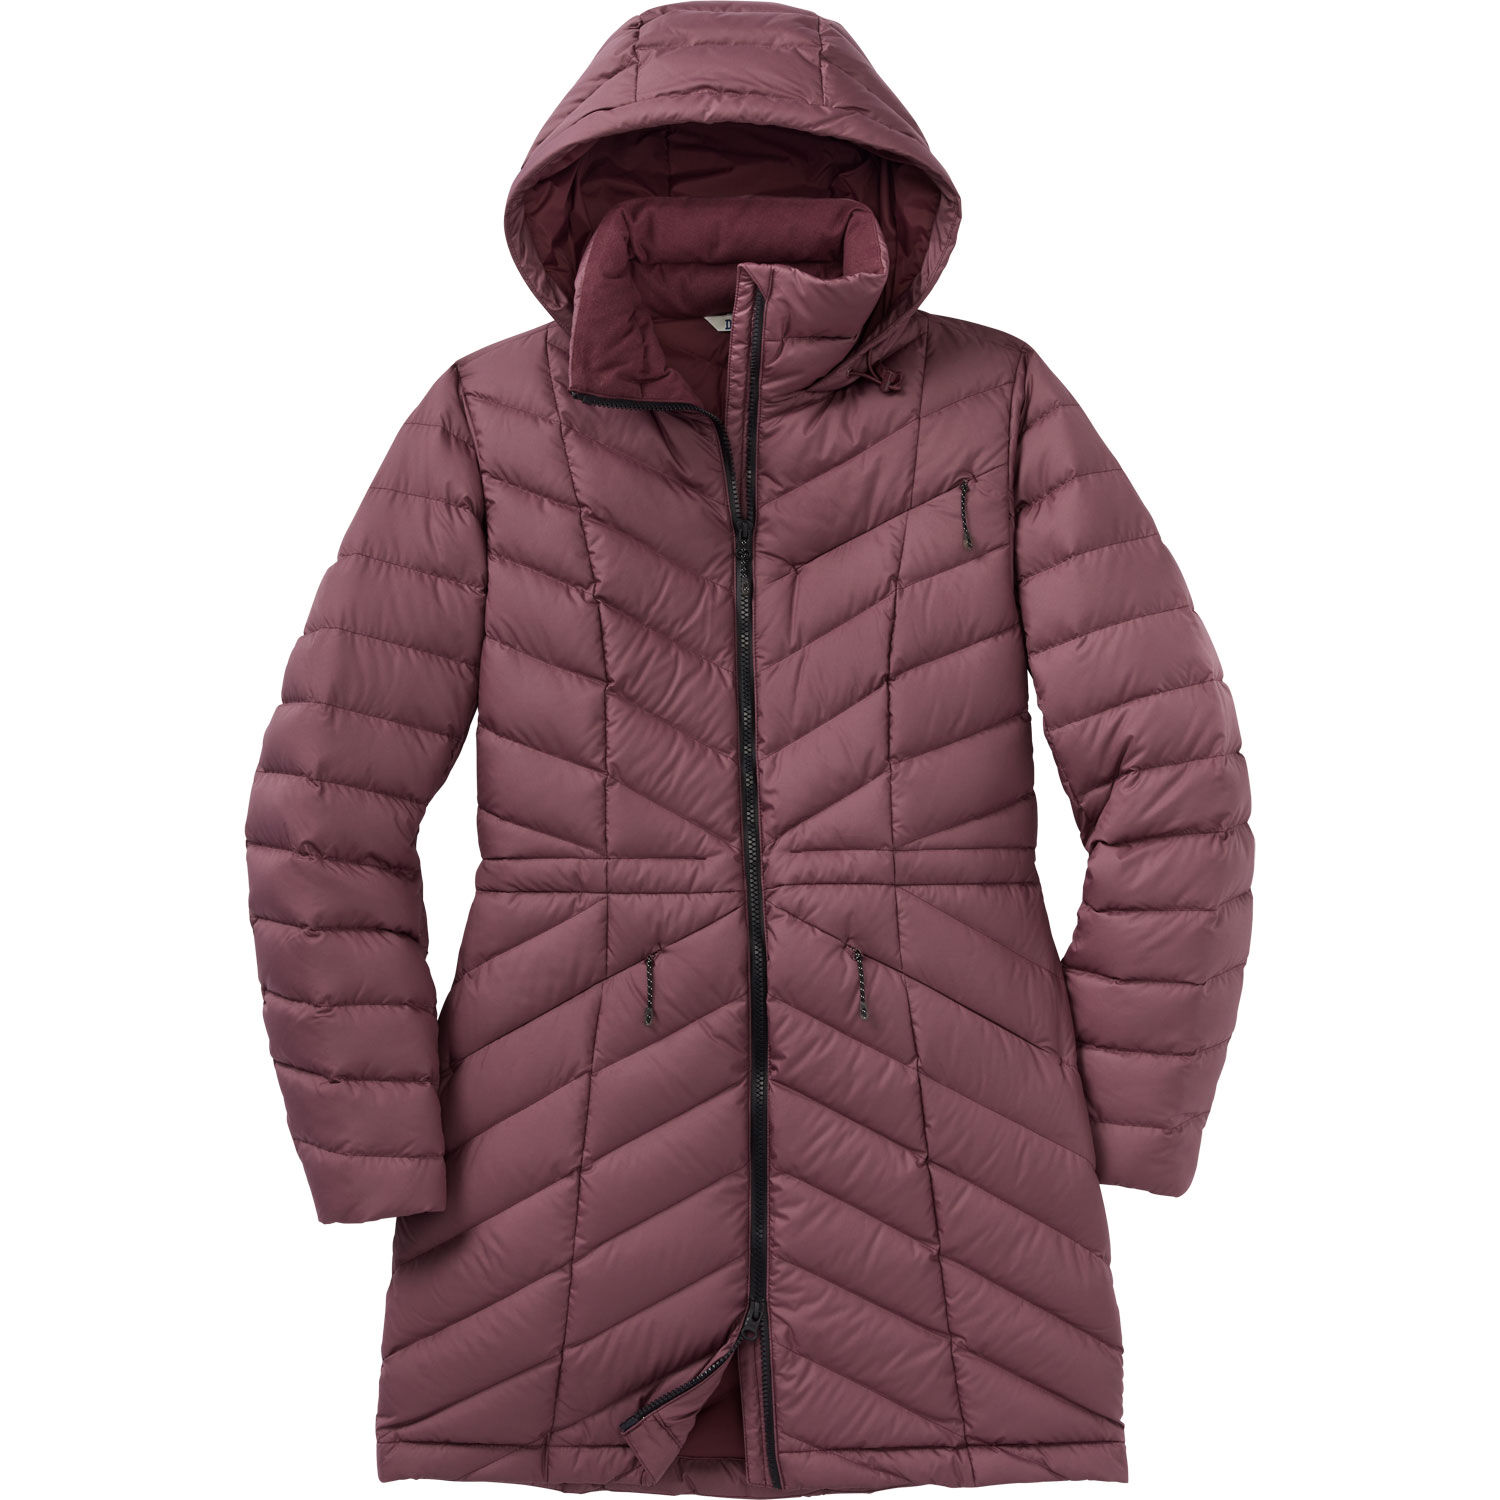 Polar Women's Packable Down Jacket | Mac in a Sac